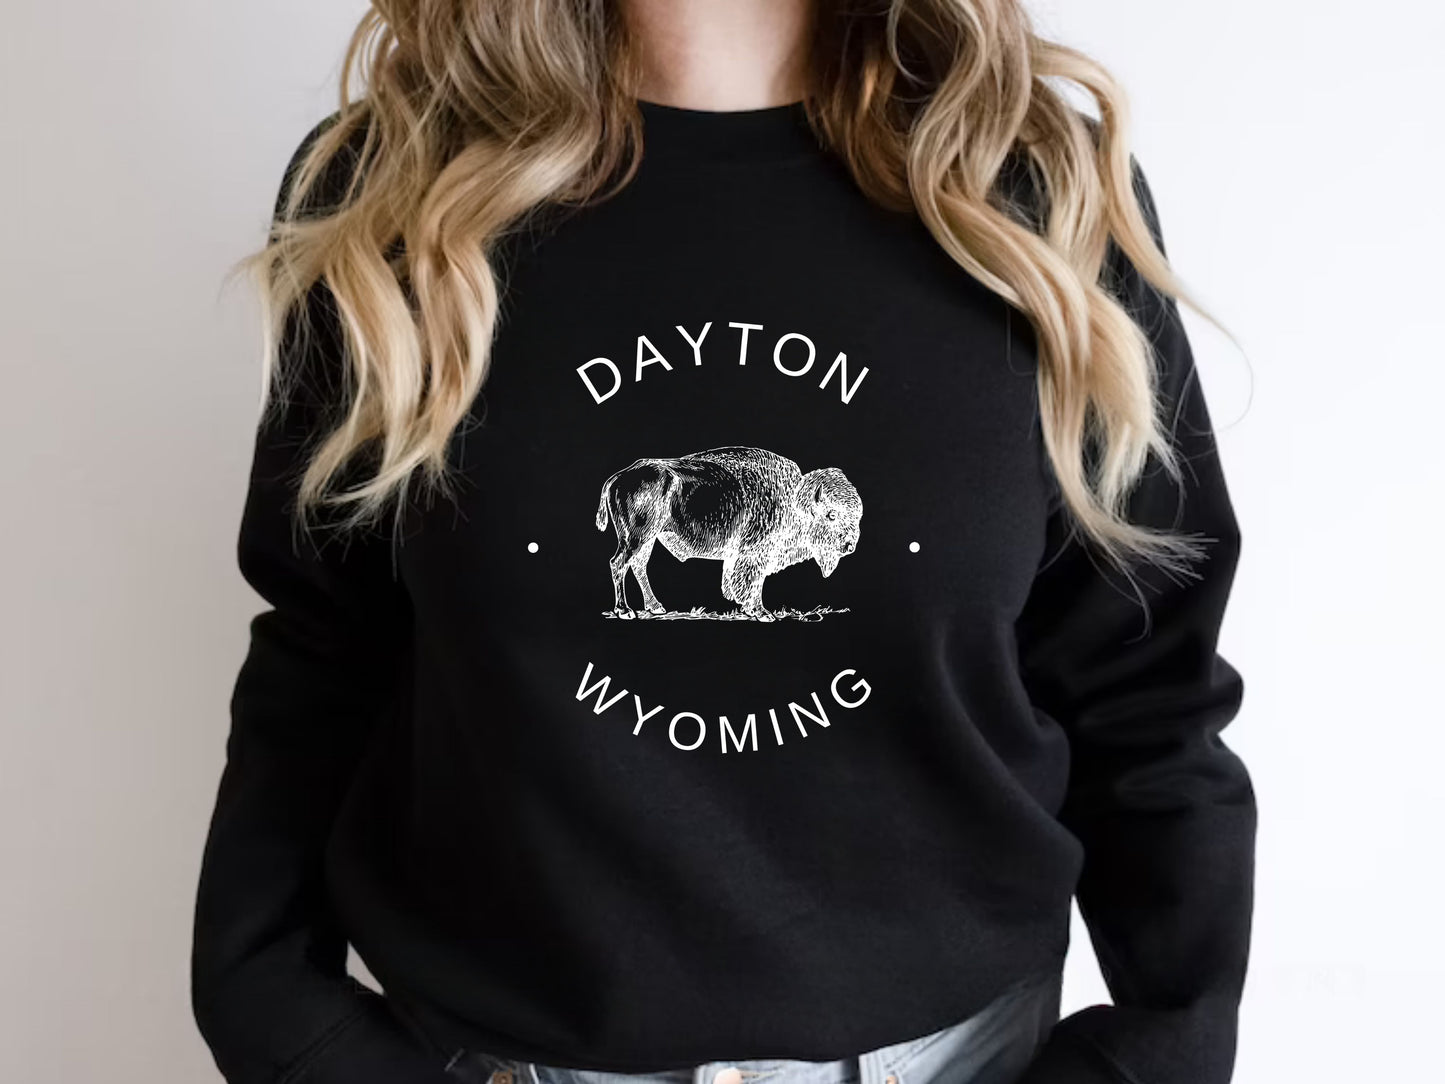 Dayton Women Wyoming Sweatshirt